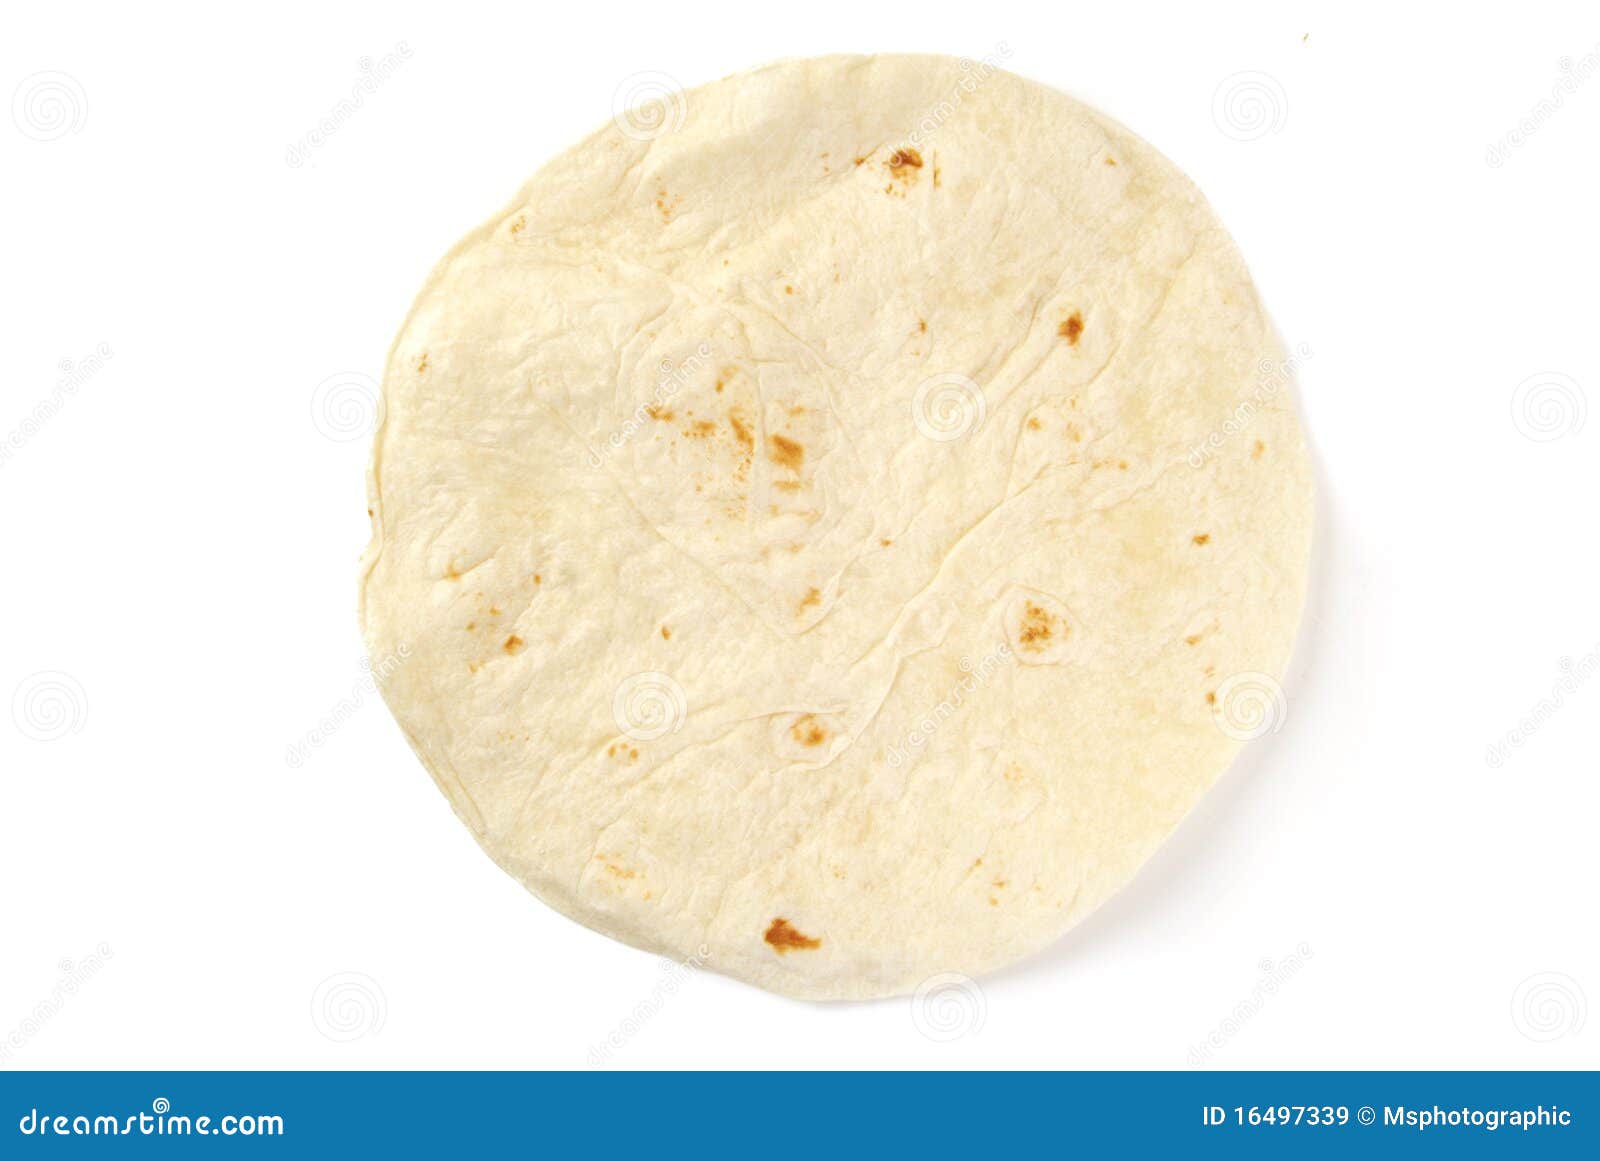 Single Tortilla Shell On White Stock Image - Image: 16497339